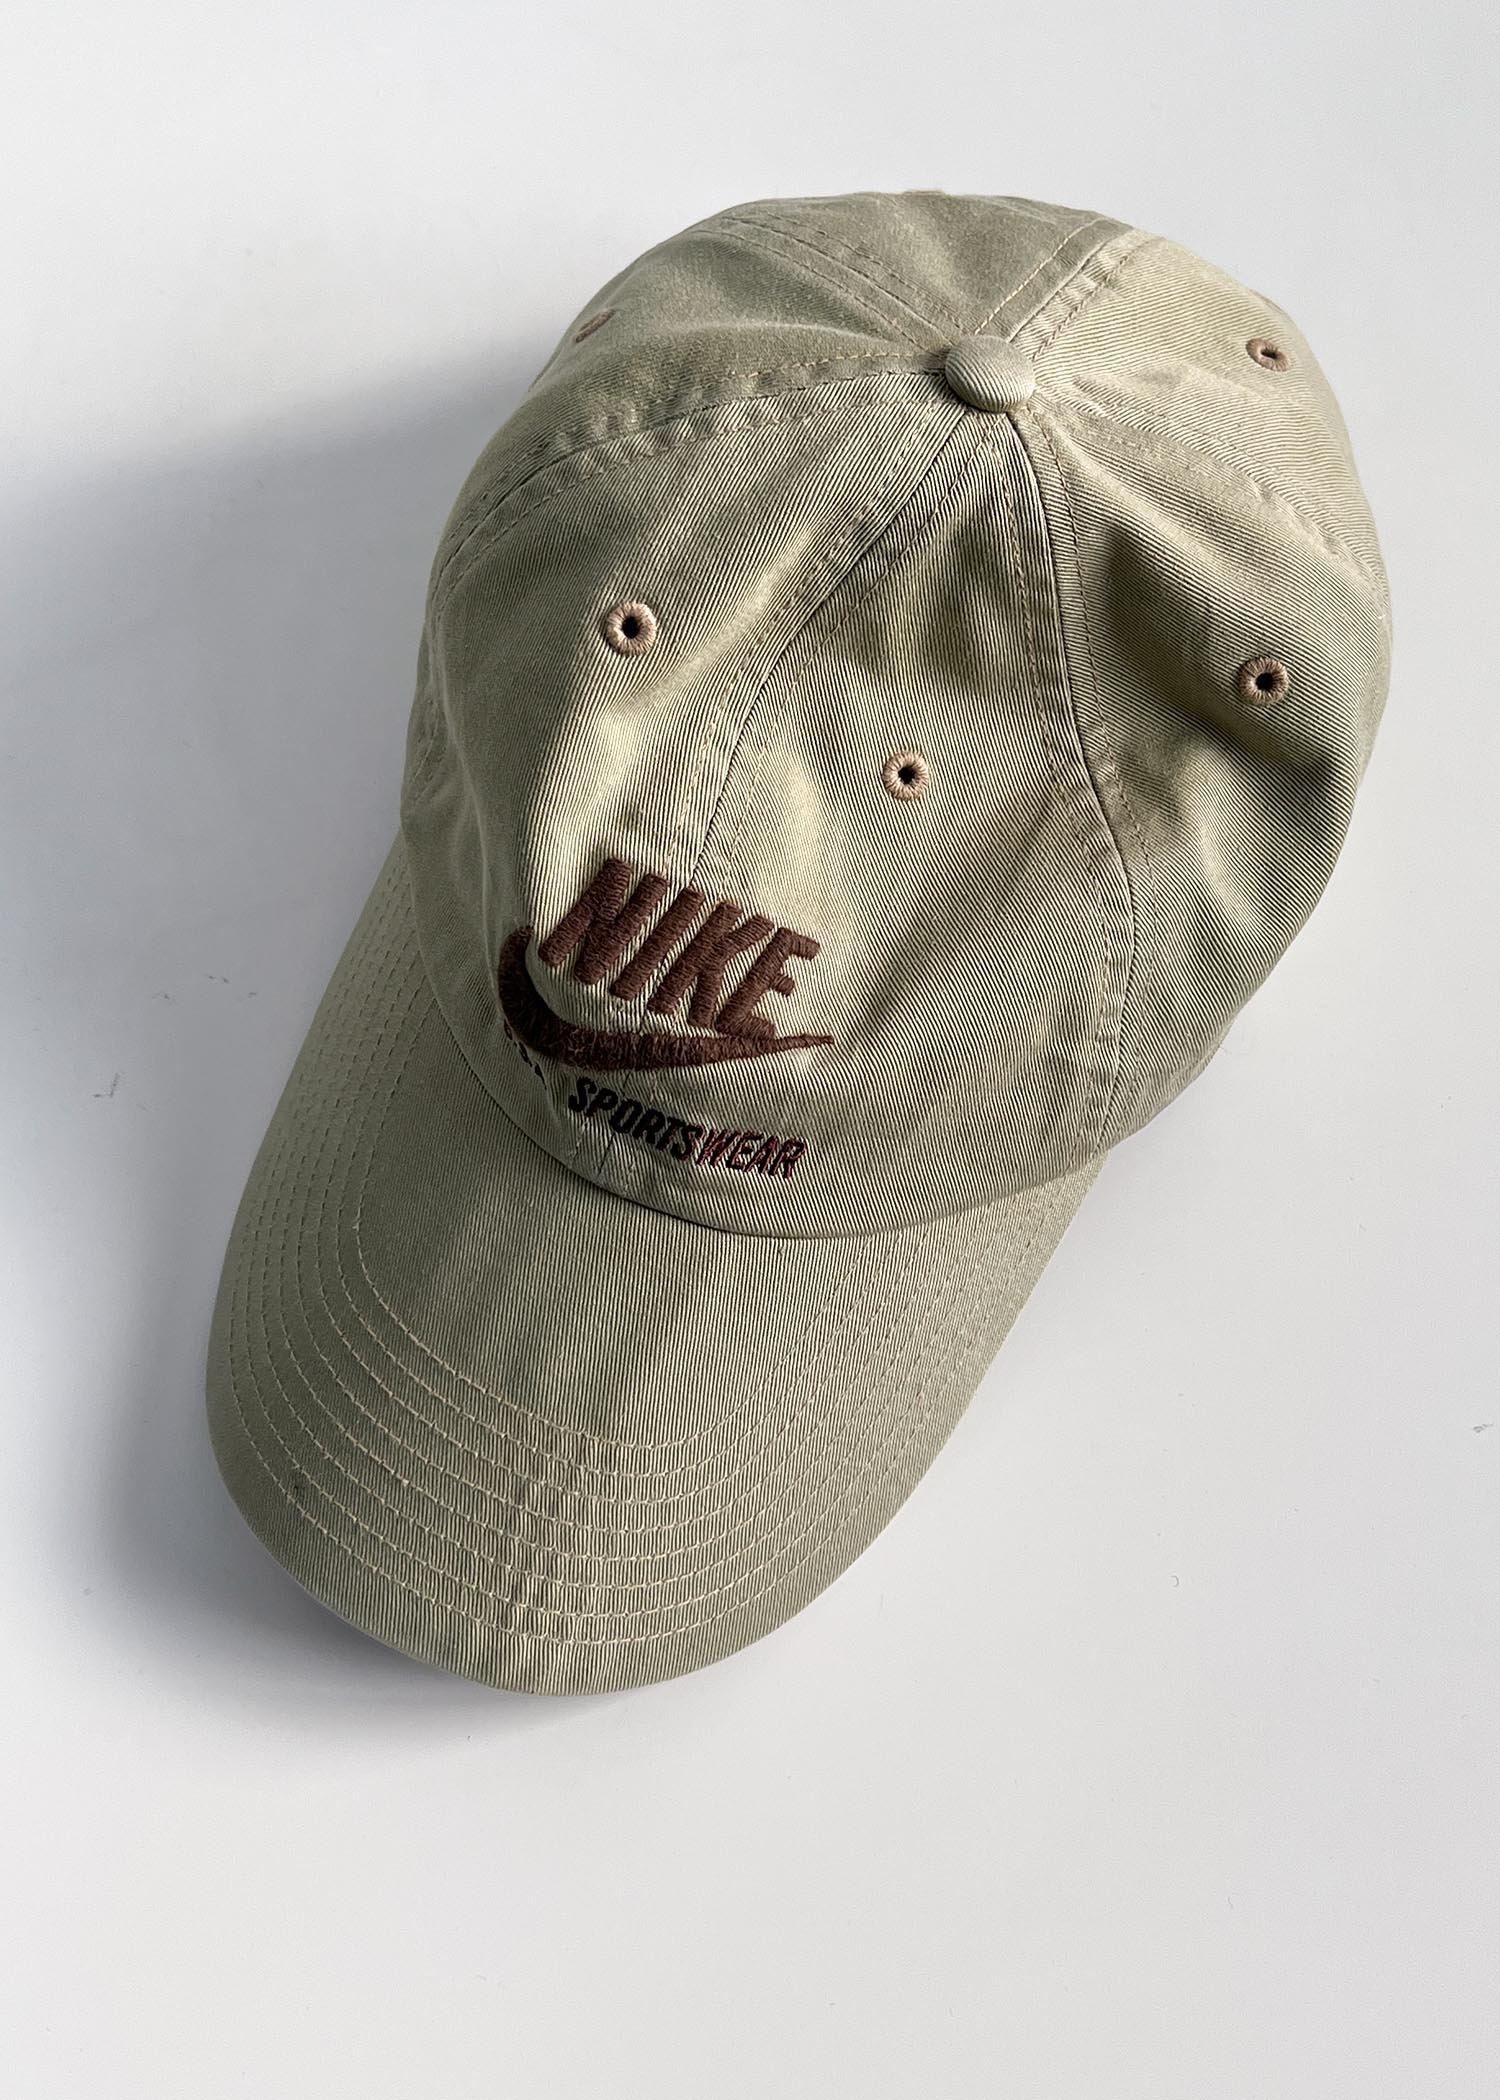 vintage NIKE ball cap